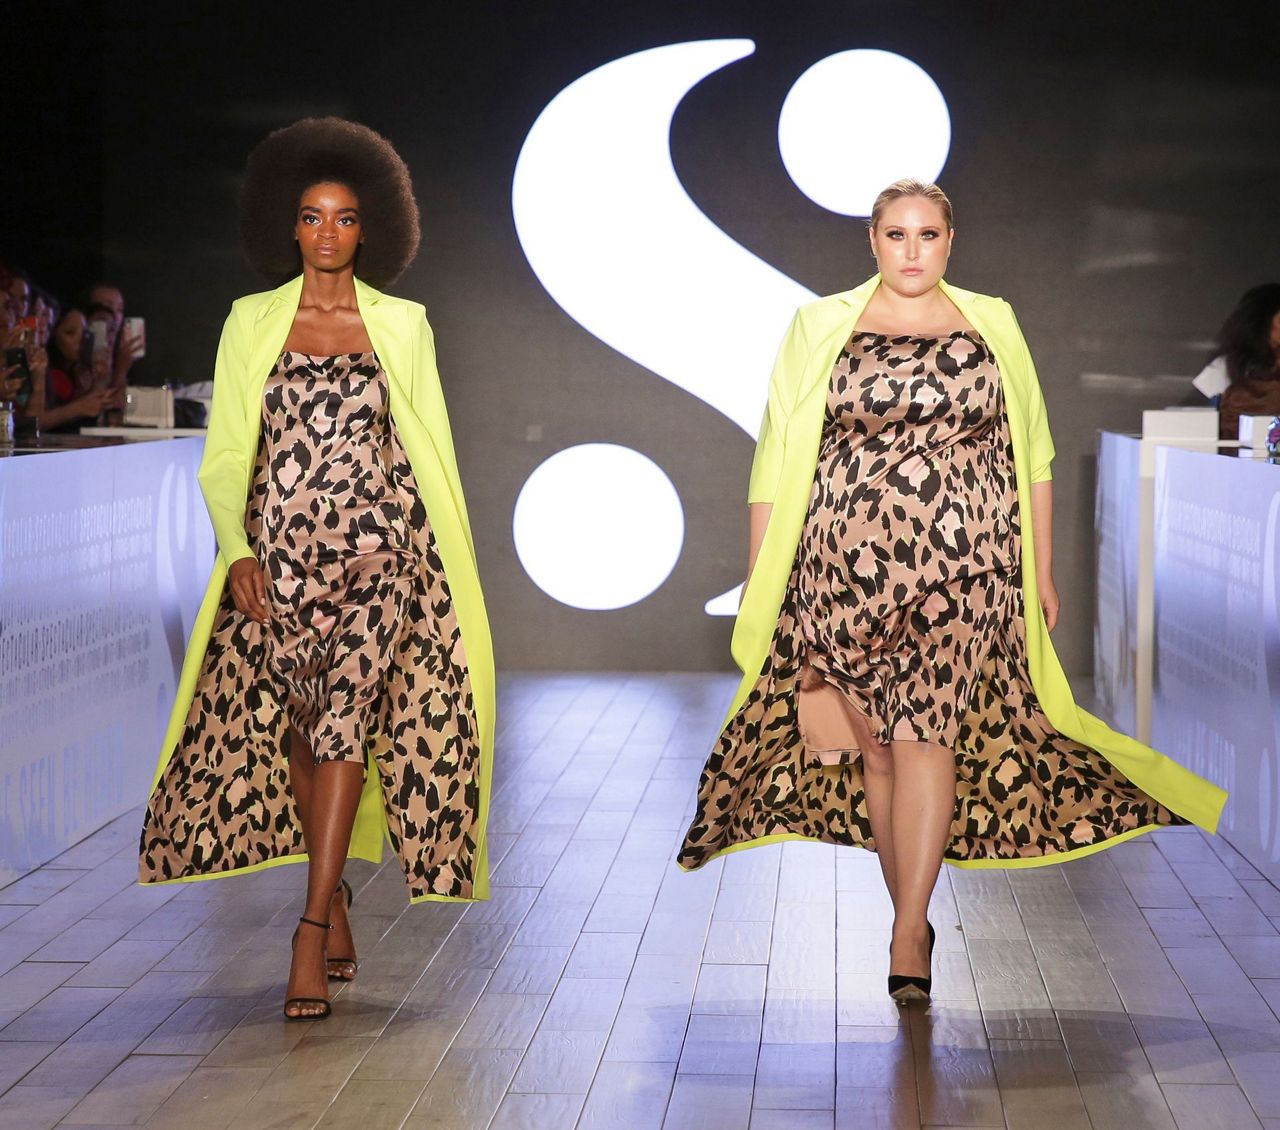 Tennis court to runway: Serena Williams hits Fashion Week1280 x 1130